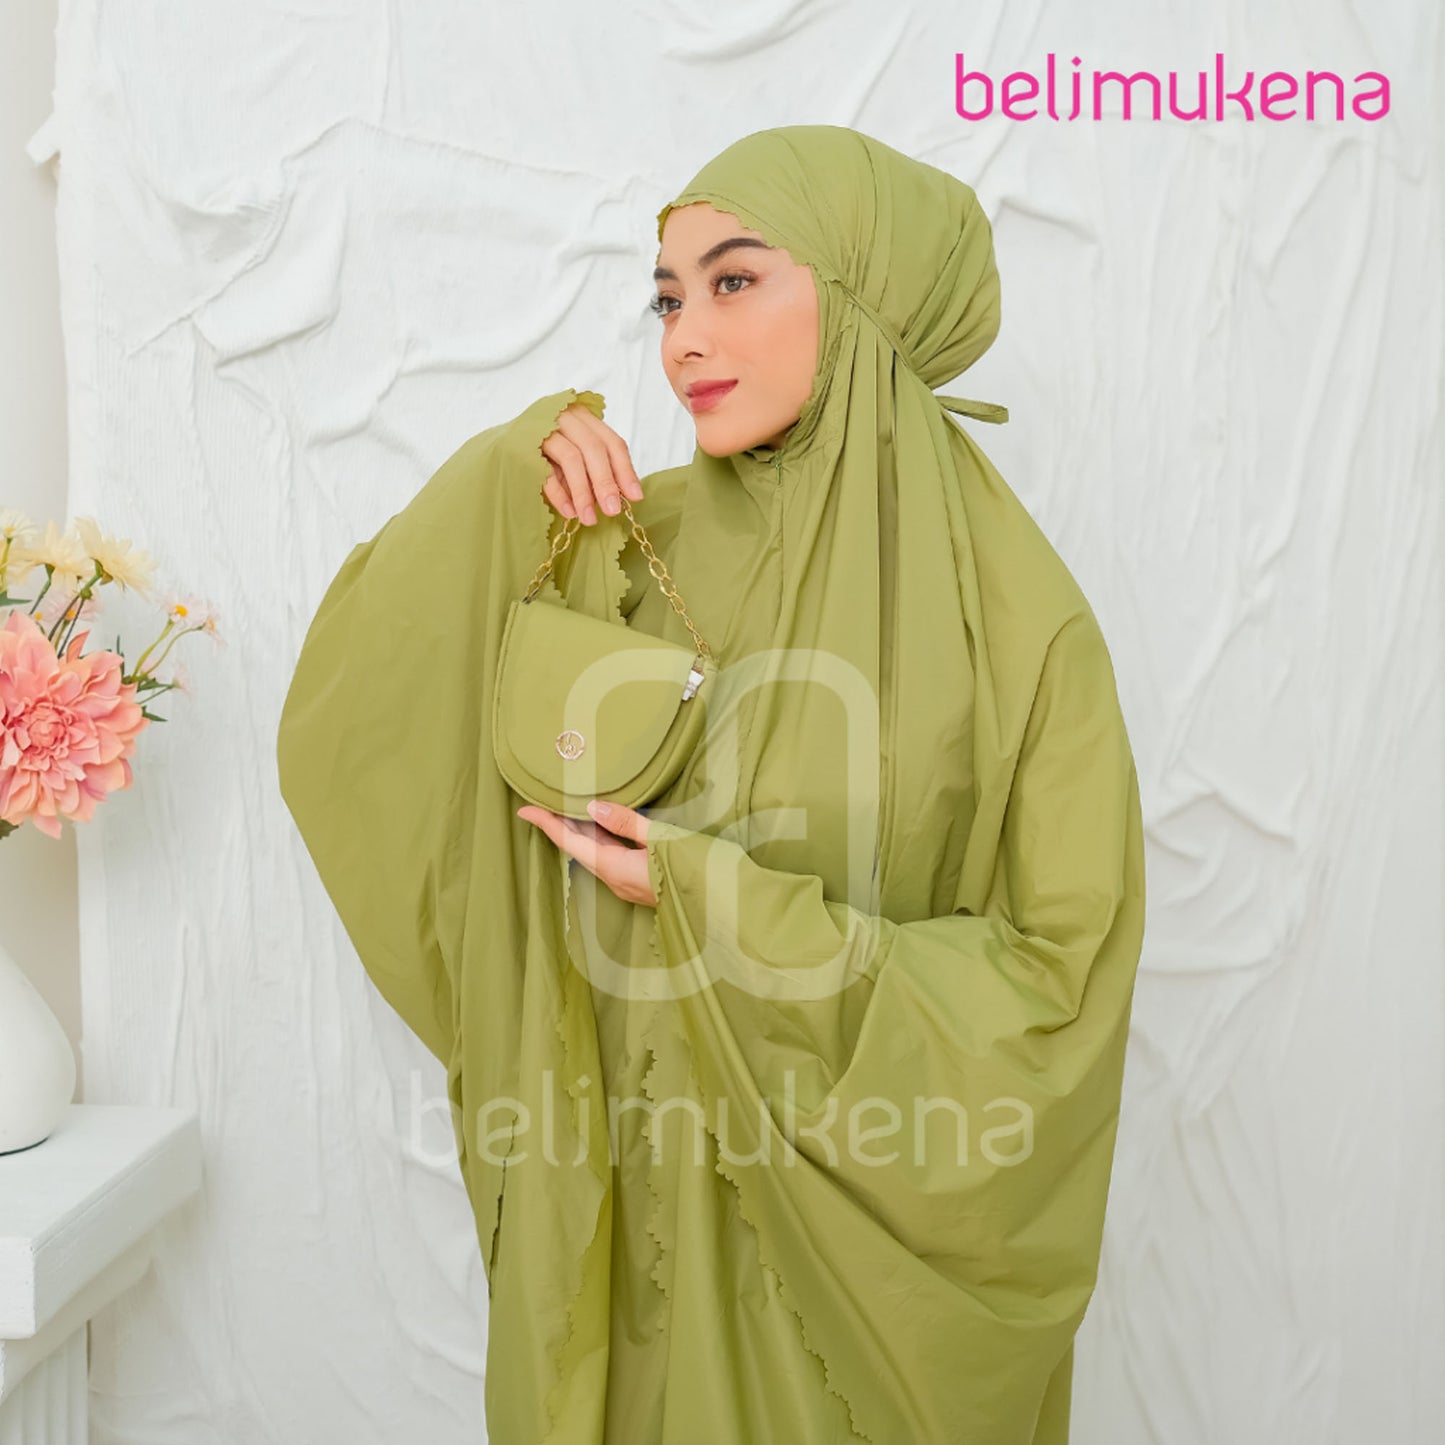 Mukena Mini Parachute Premium Korea 2in1 Daily Lasercut Travel Yuri Muslim Prayer Dress